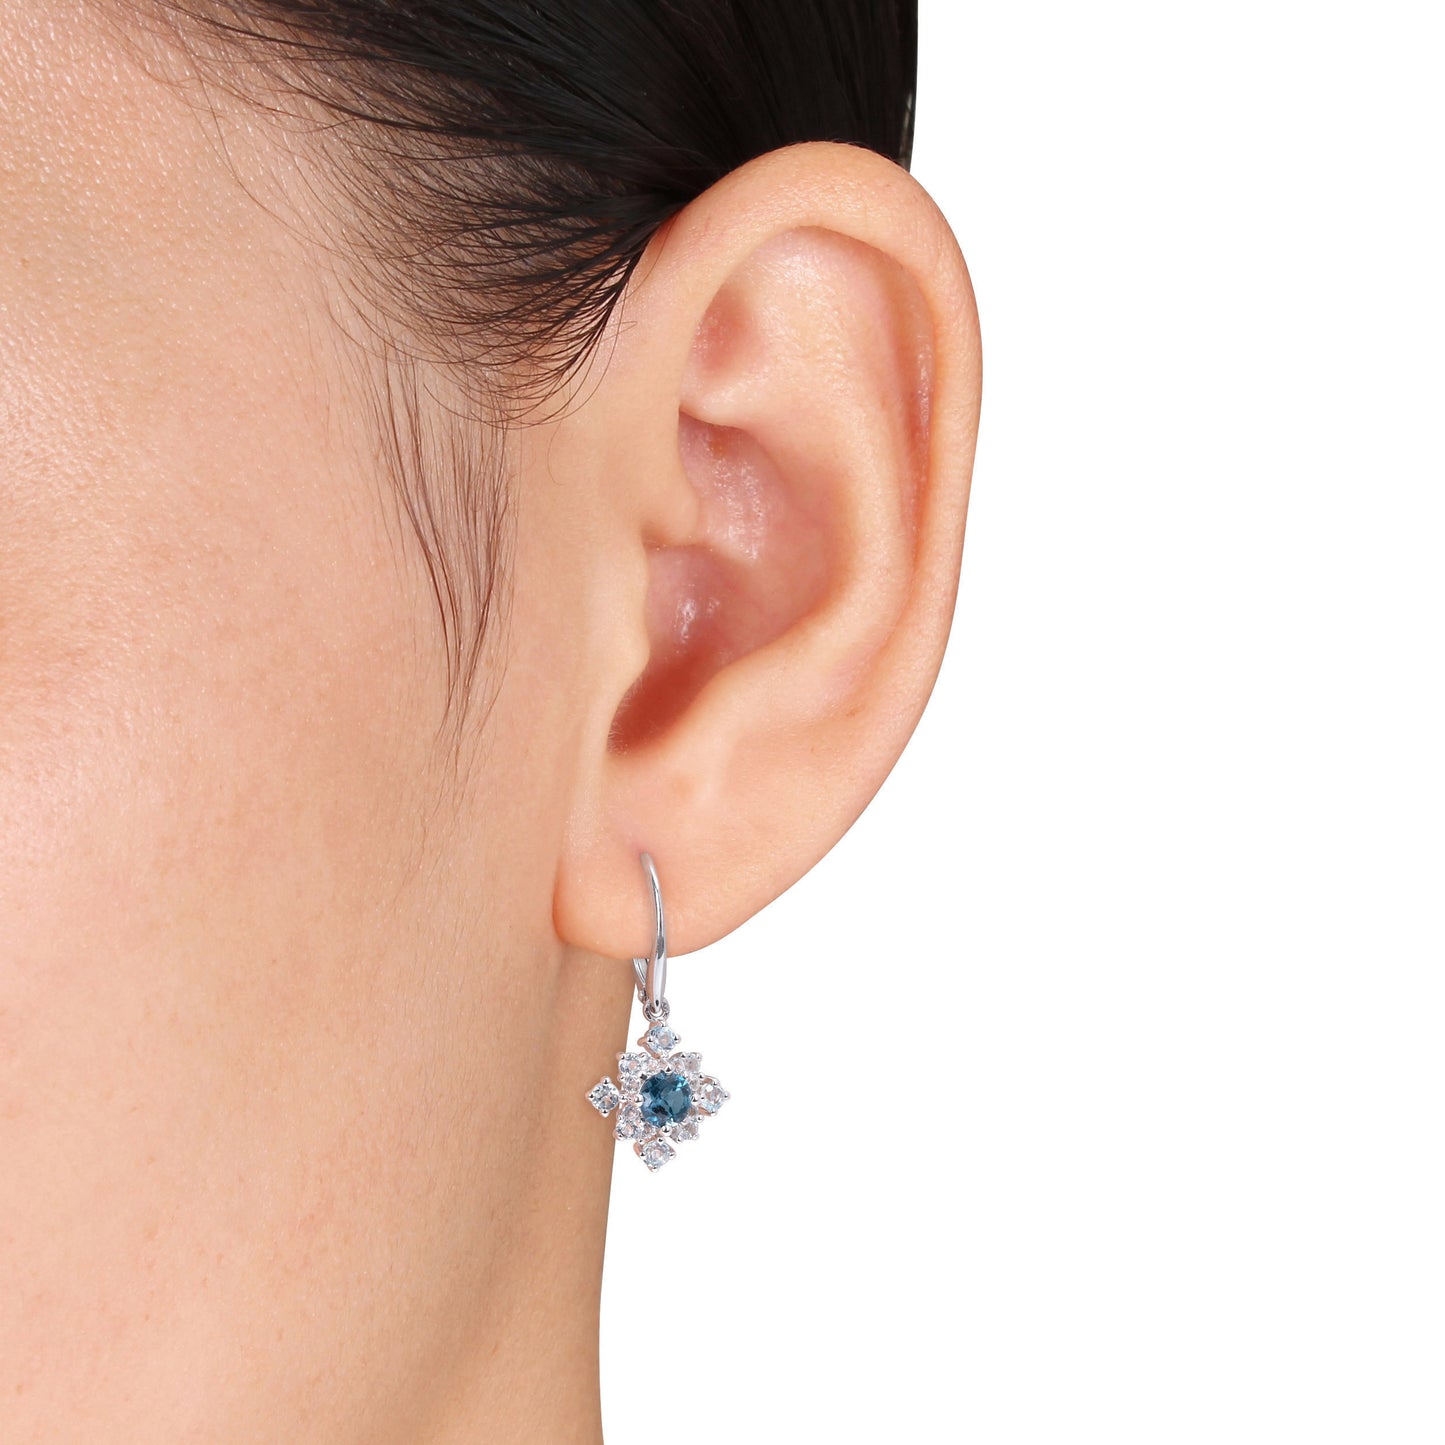 2 5/8ct Blue & White Cluster Drop Earrings in Sterling Silver